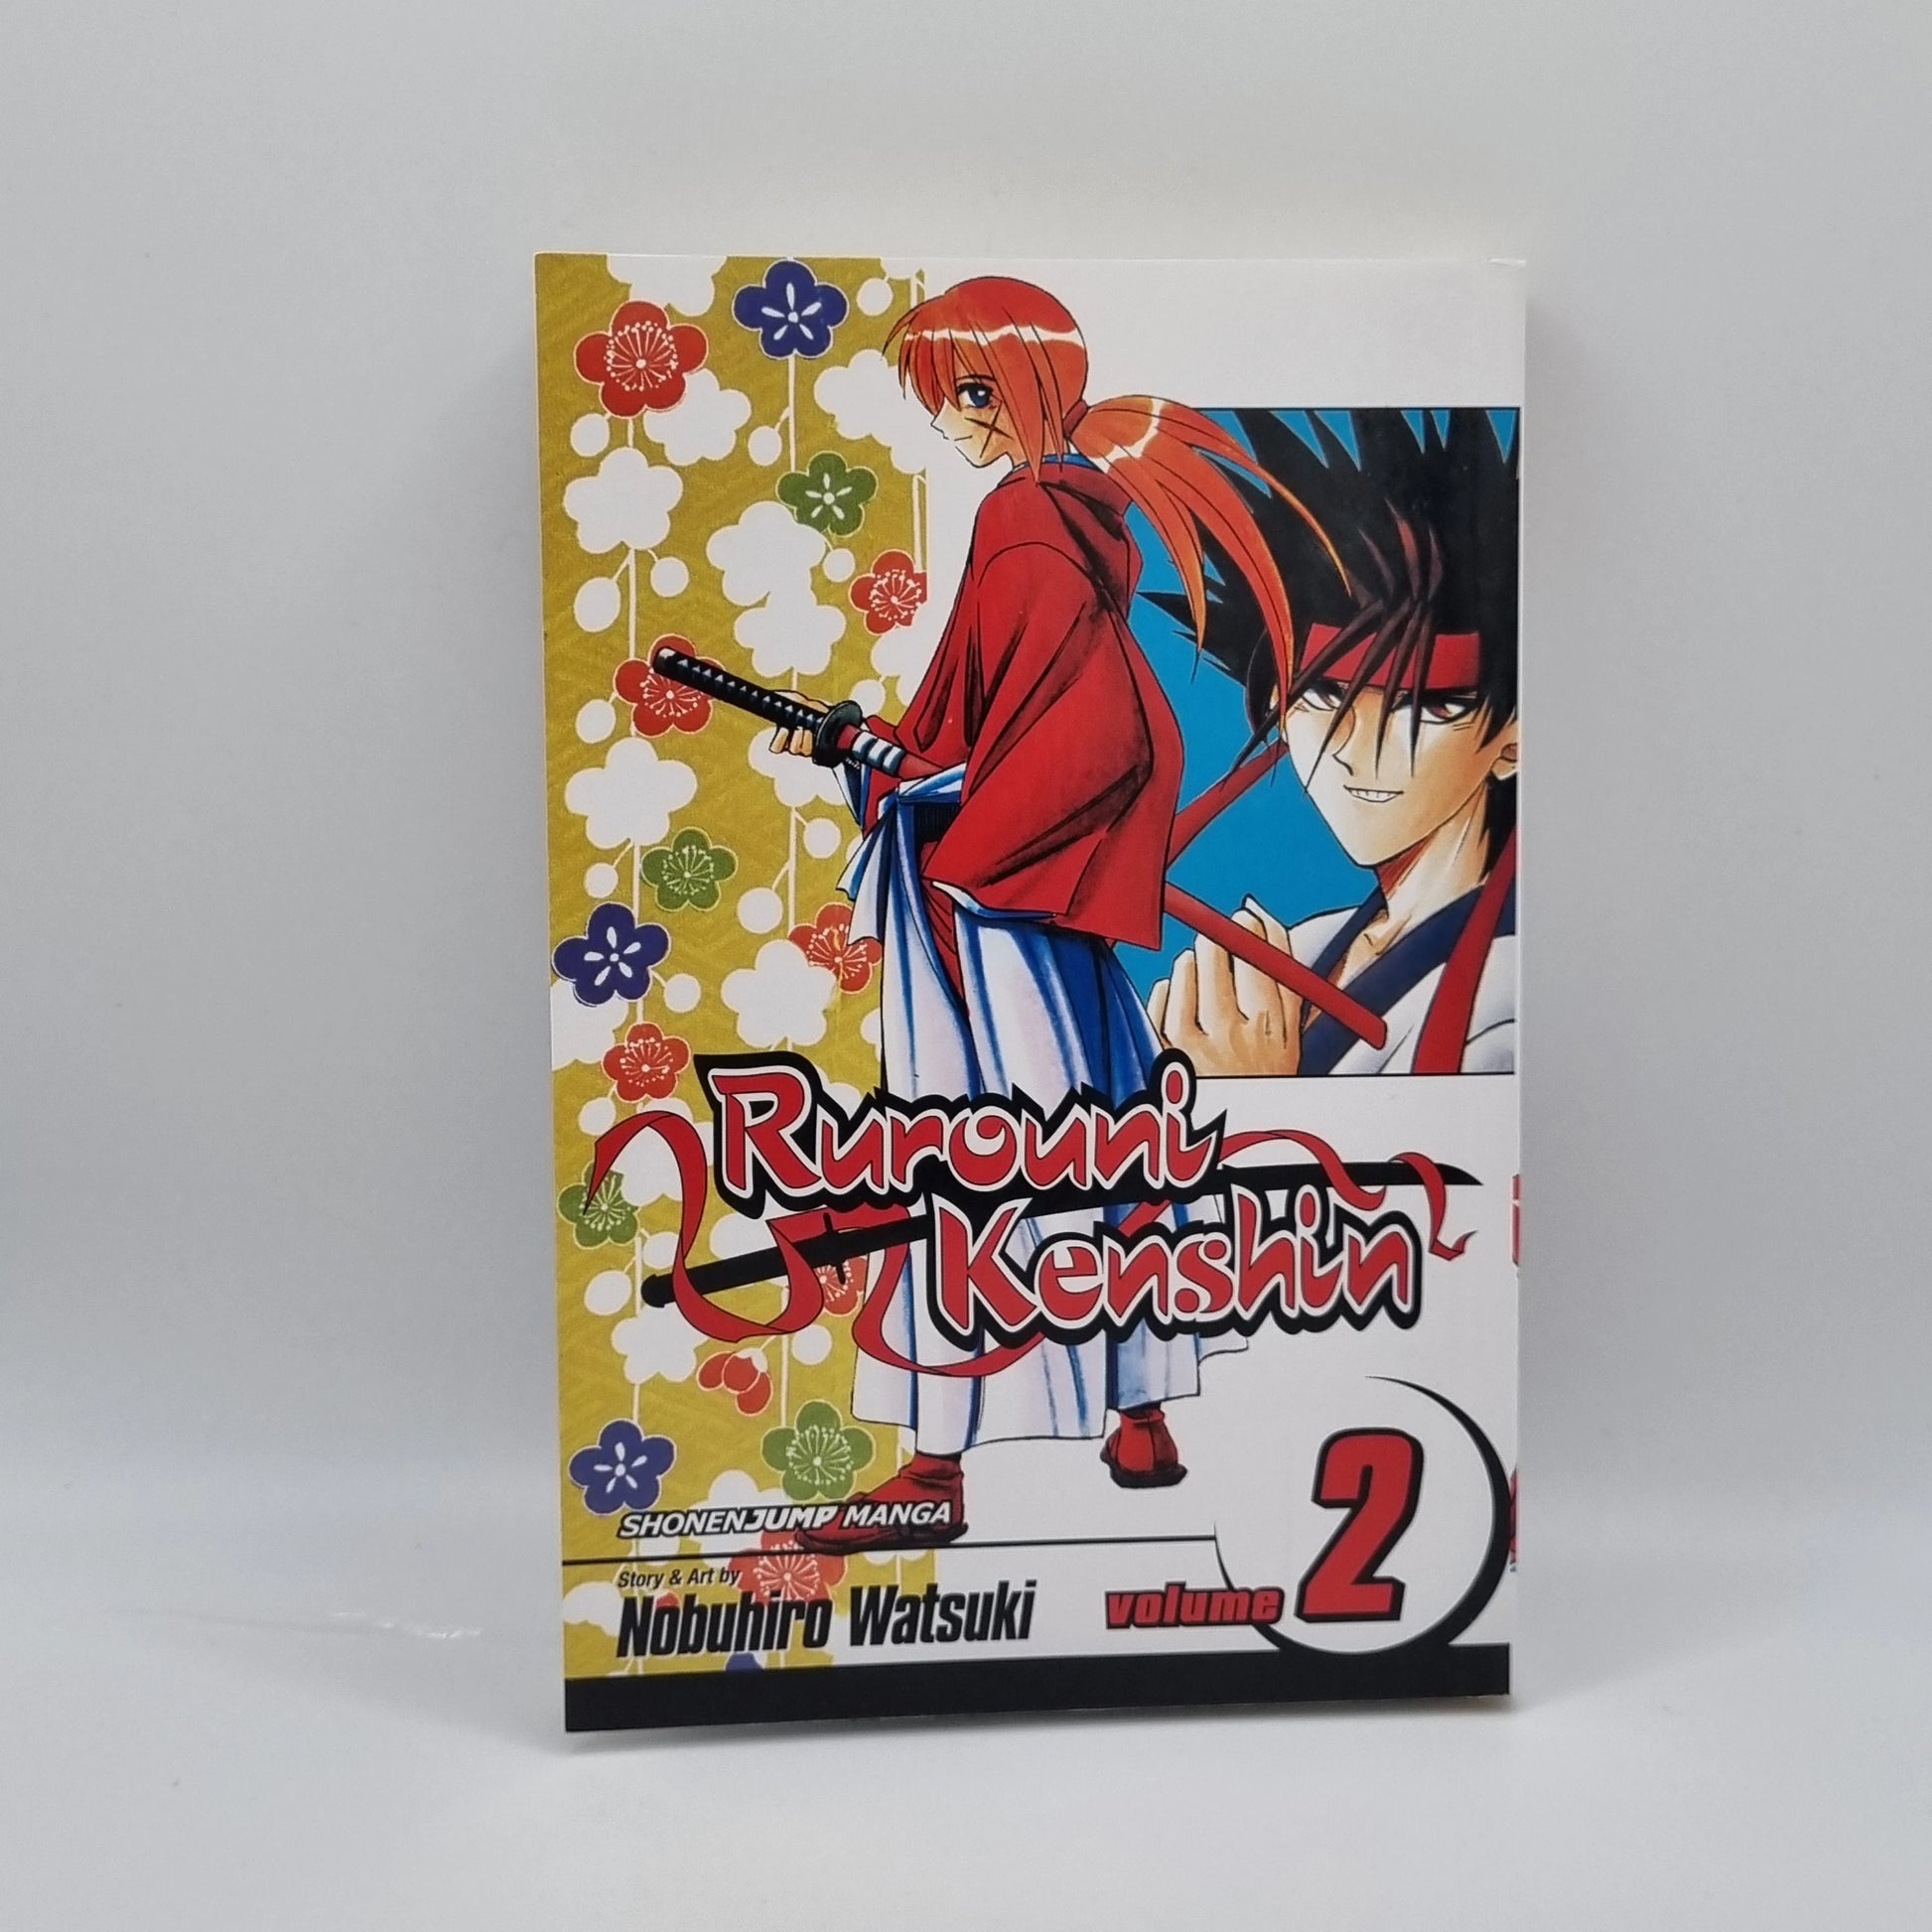 Anime store, Rurouni Kenshin Vol 2, Front View